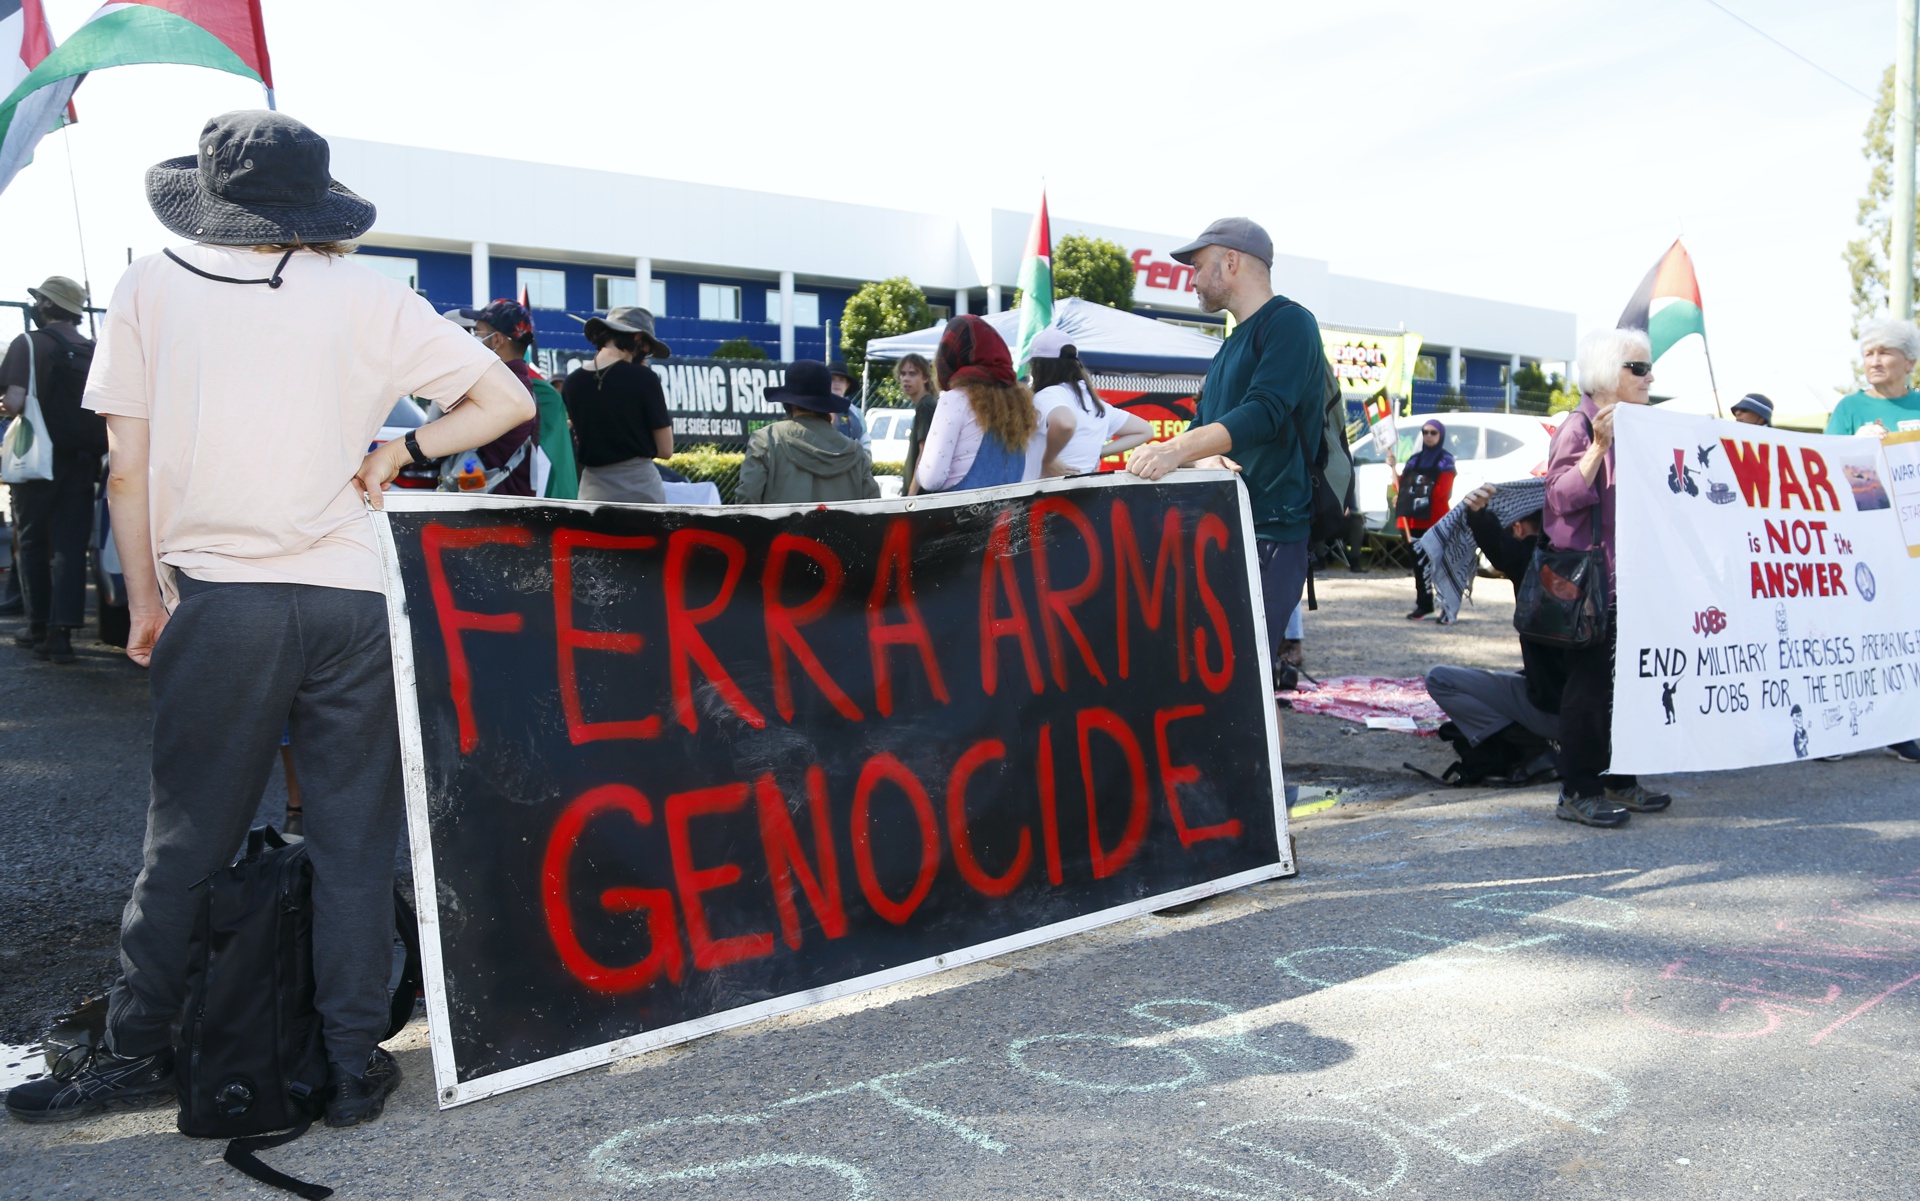 Ferra arms genocide